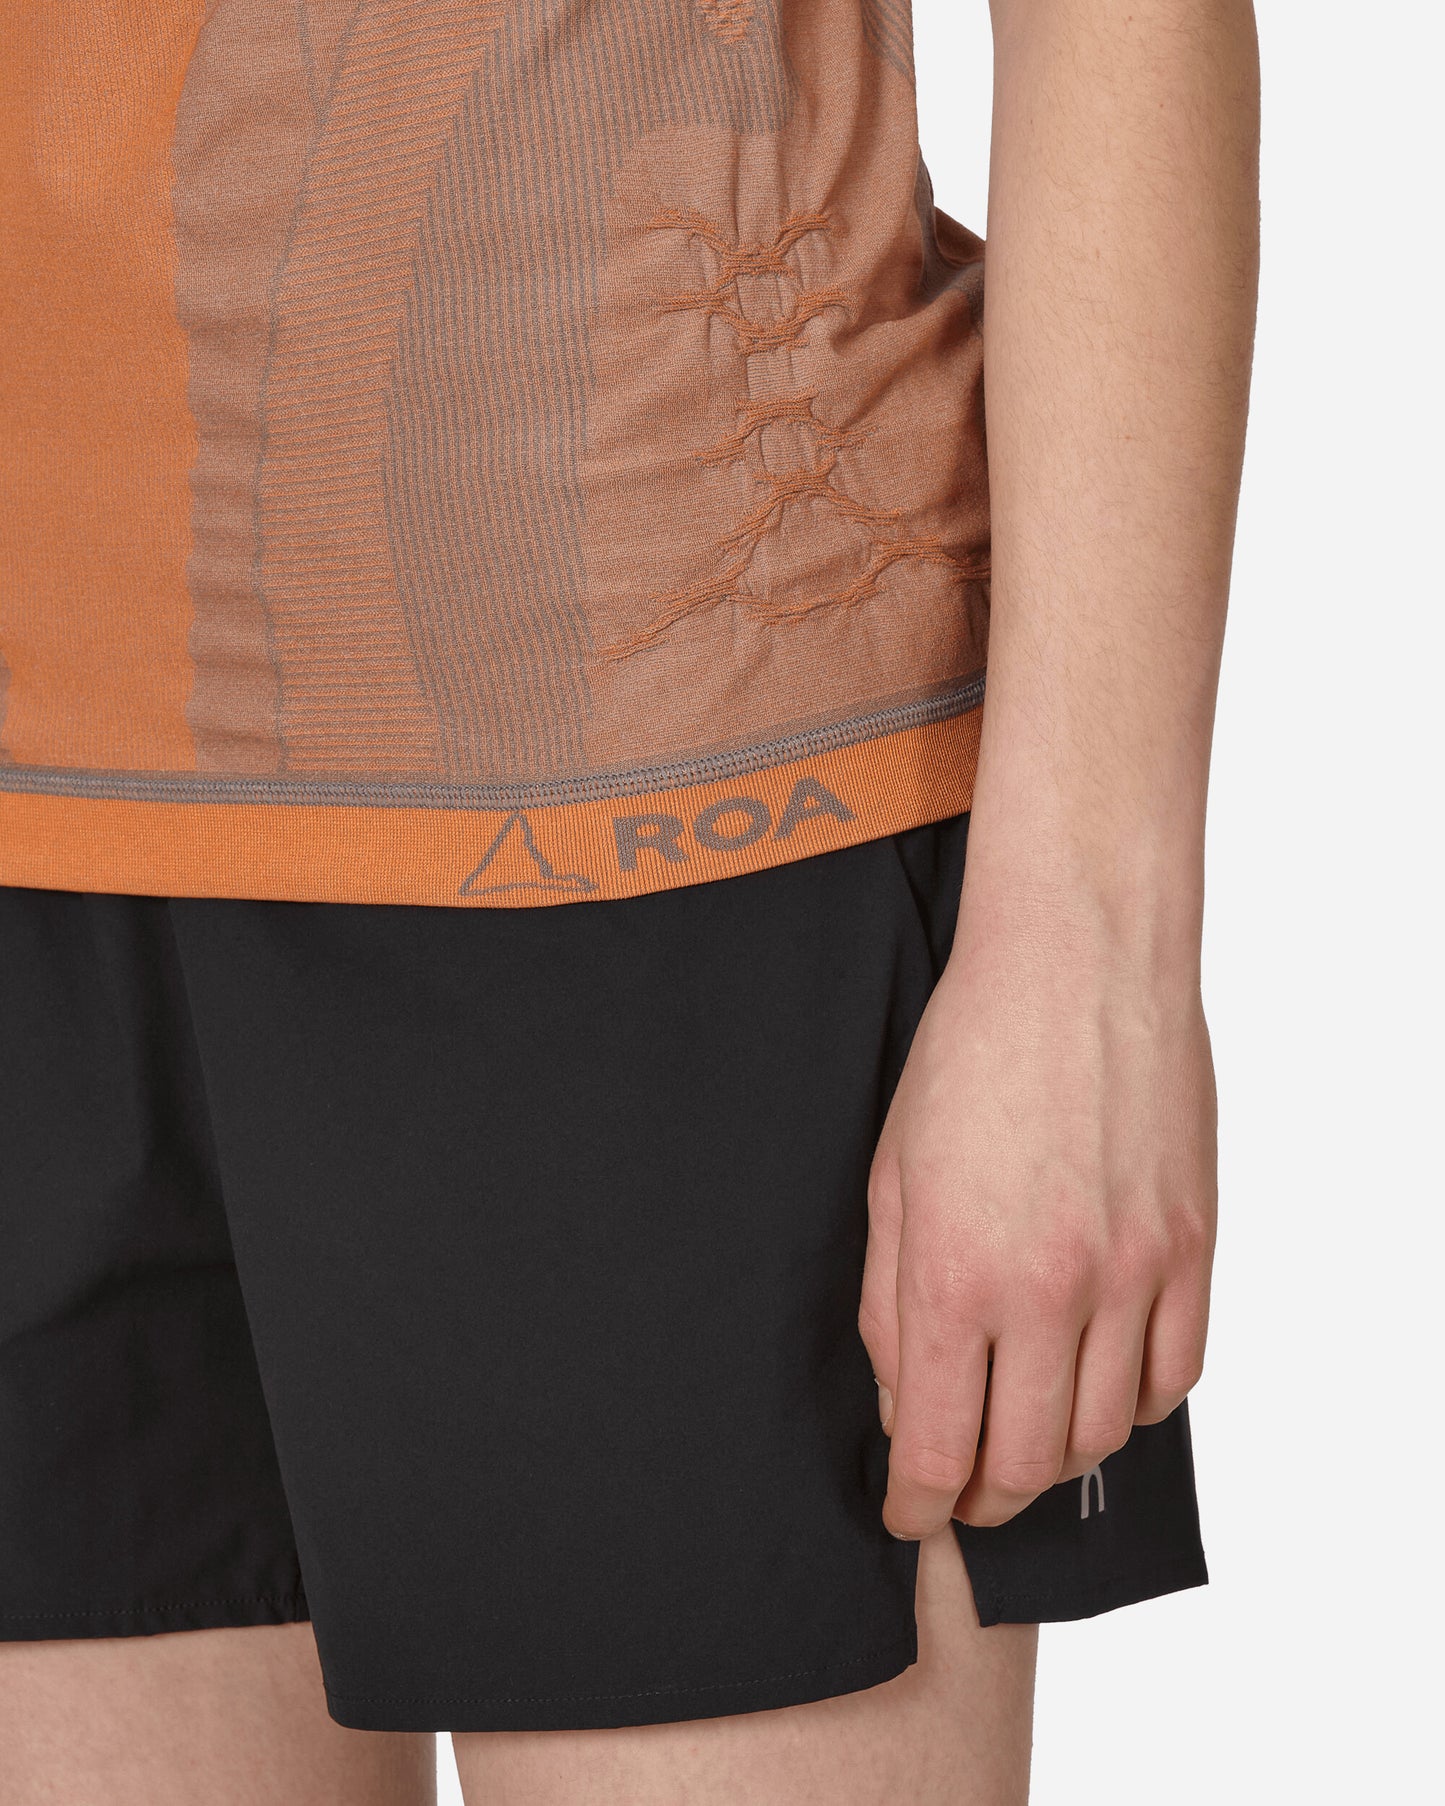 ROA Seamless T-Shirt Orange T-Shirts Top RBMW084FA61 ORG0001